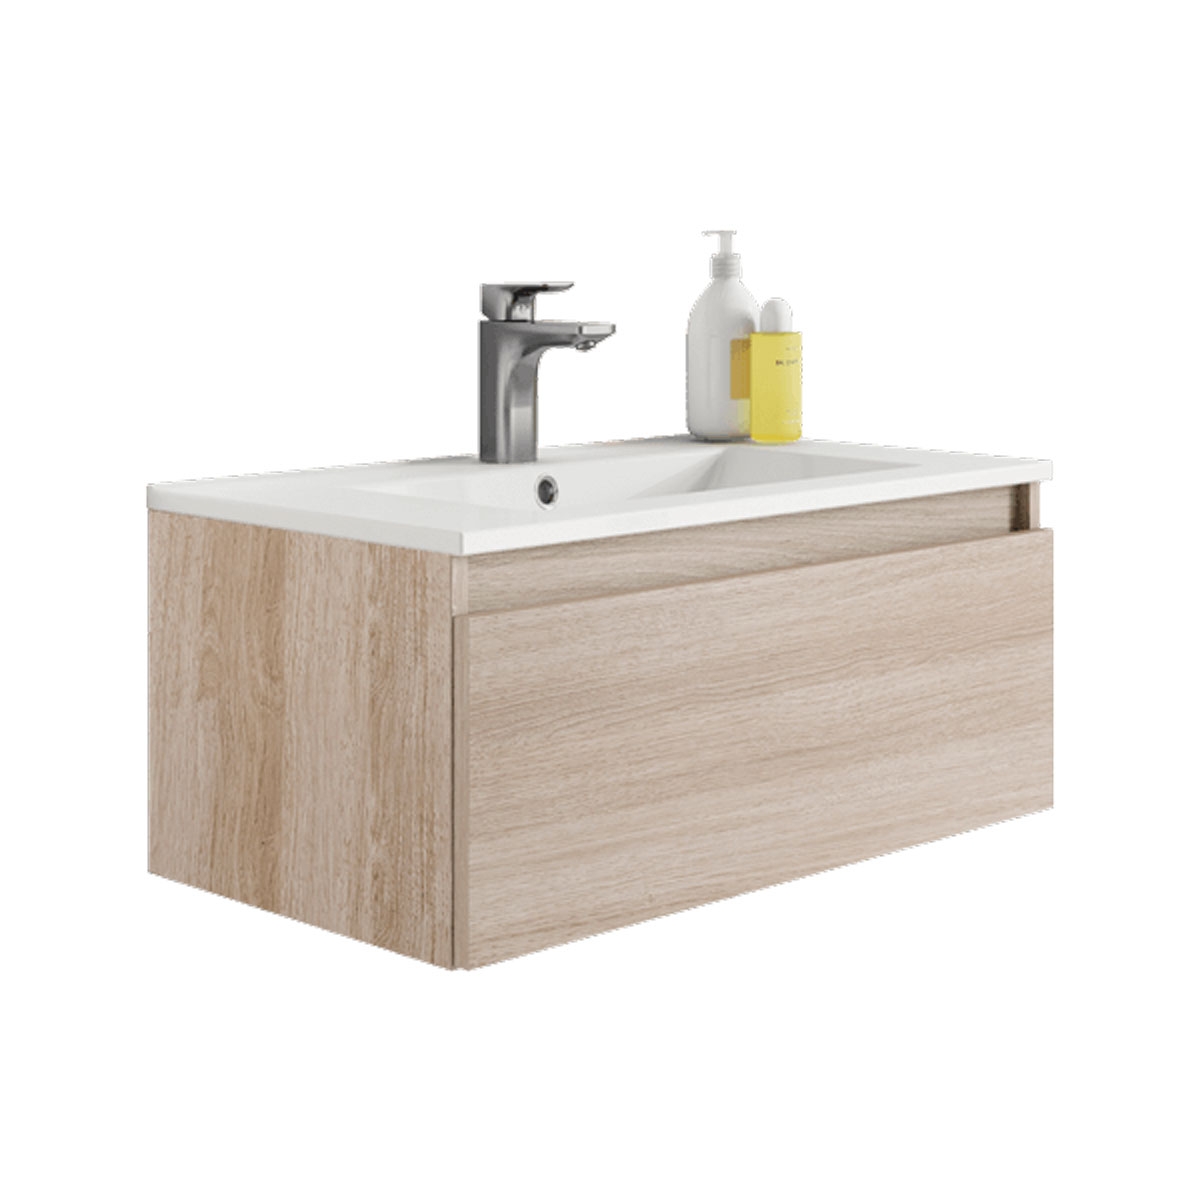 Mueble de baño suspendido con lavabo integrado Modelo Box4